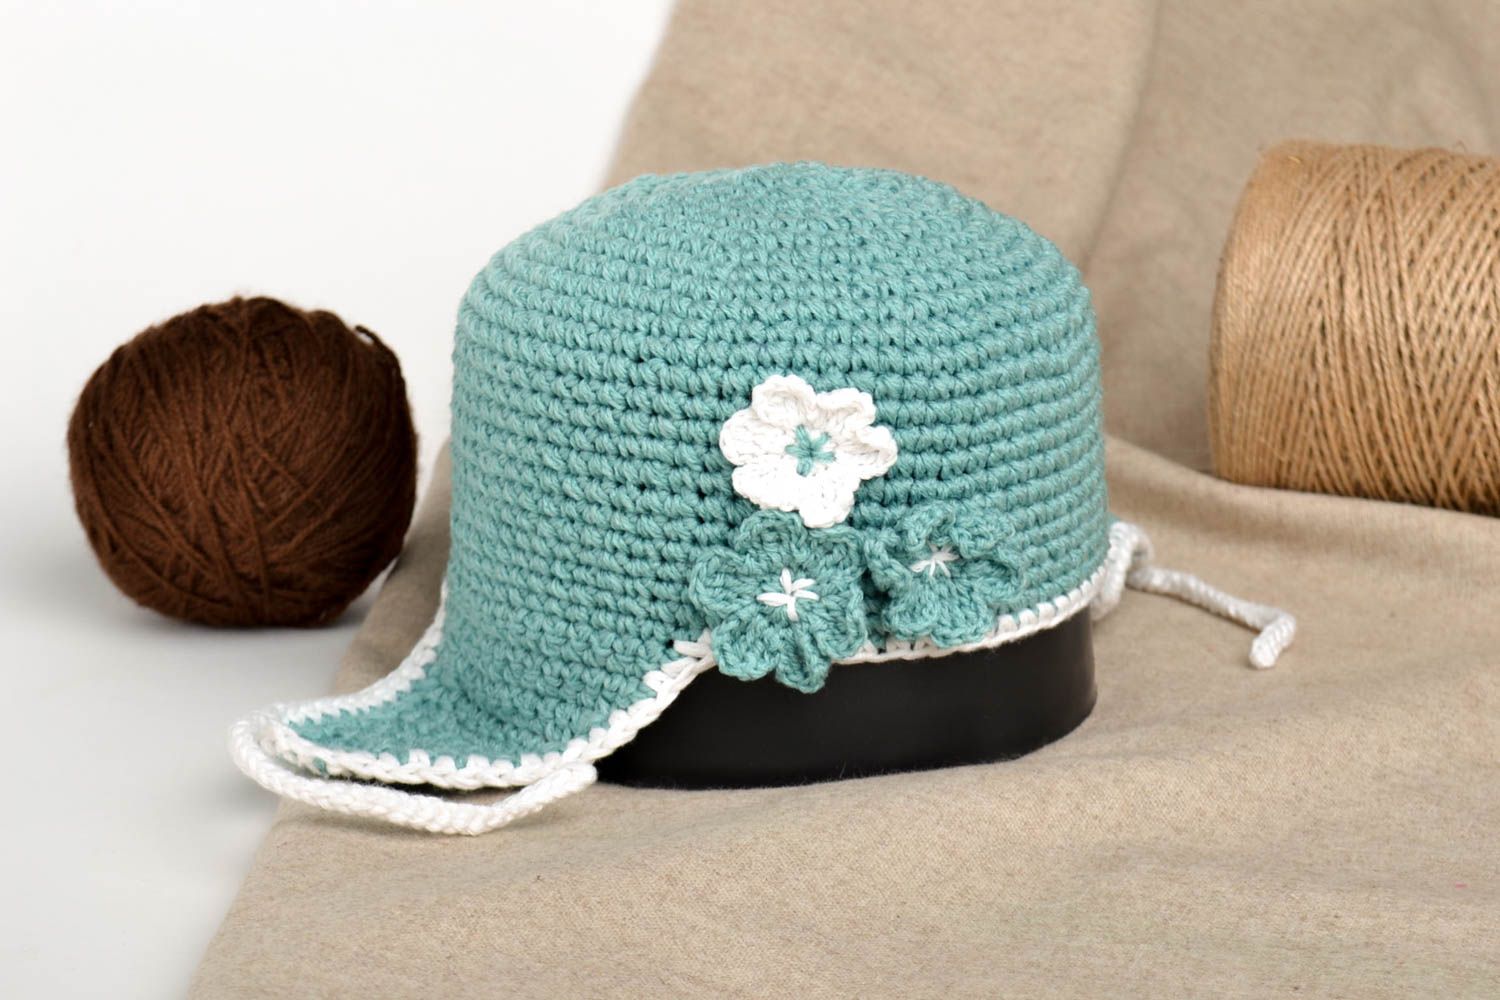 Unusual handmade crochet hat cute baby hats head accessories for kids gift ideas photo 1